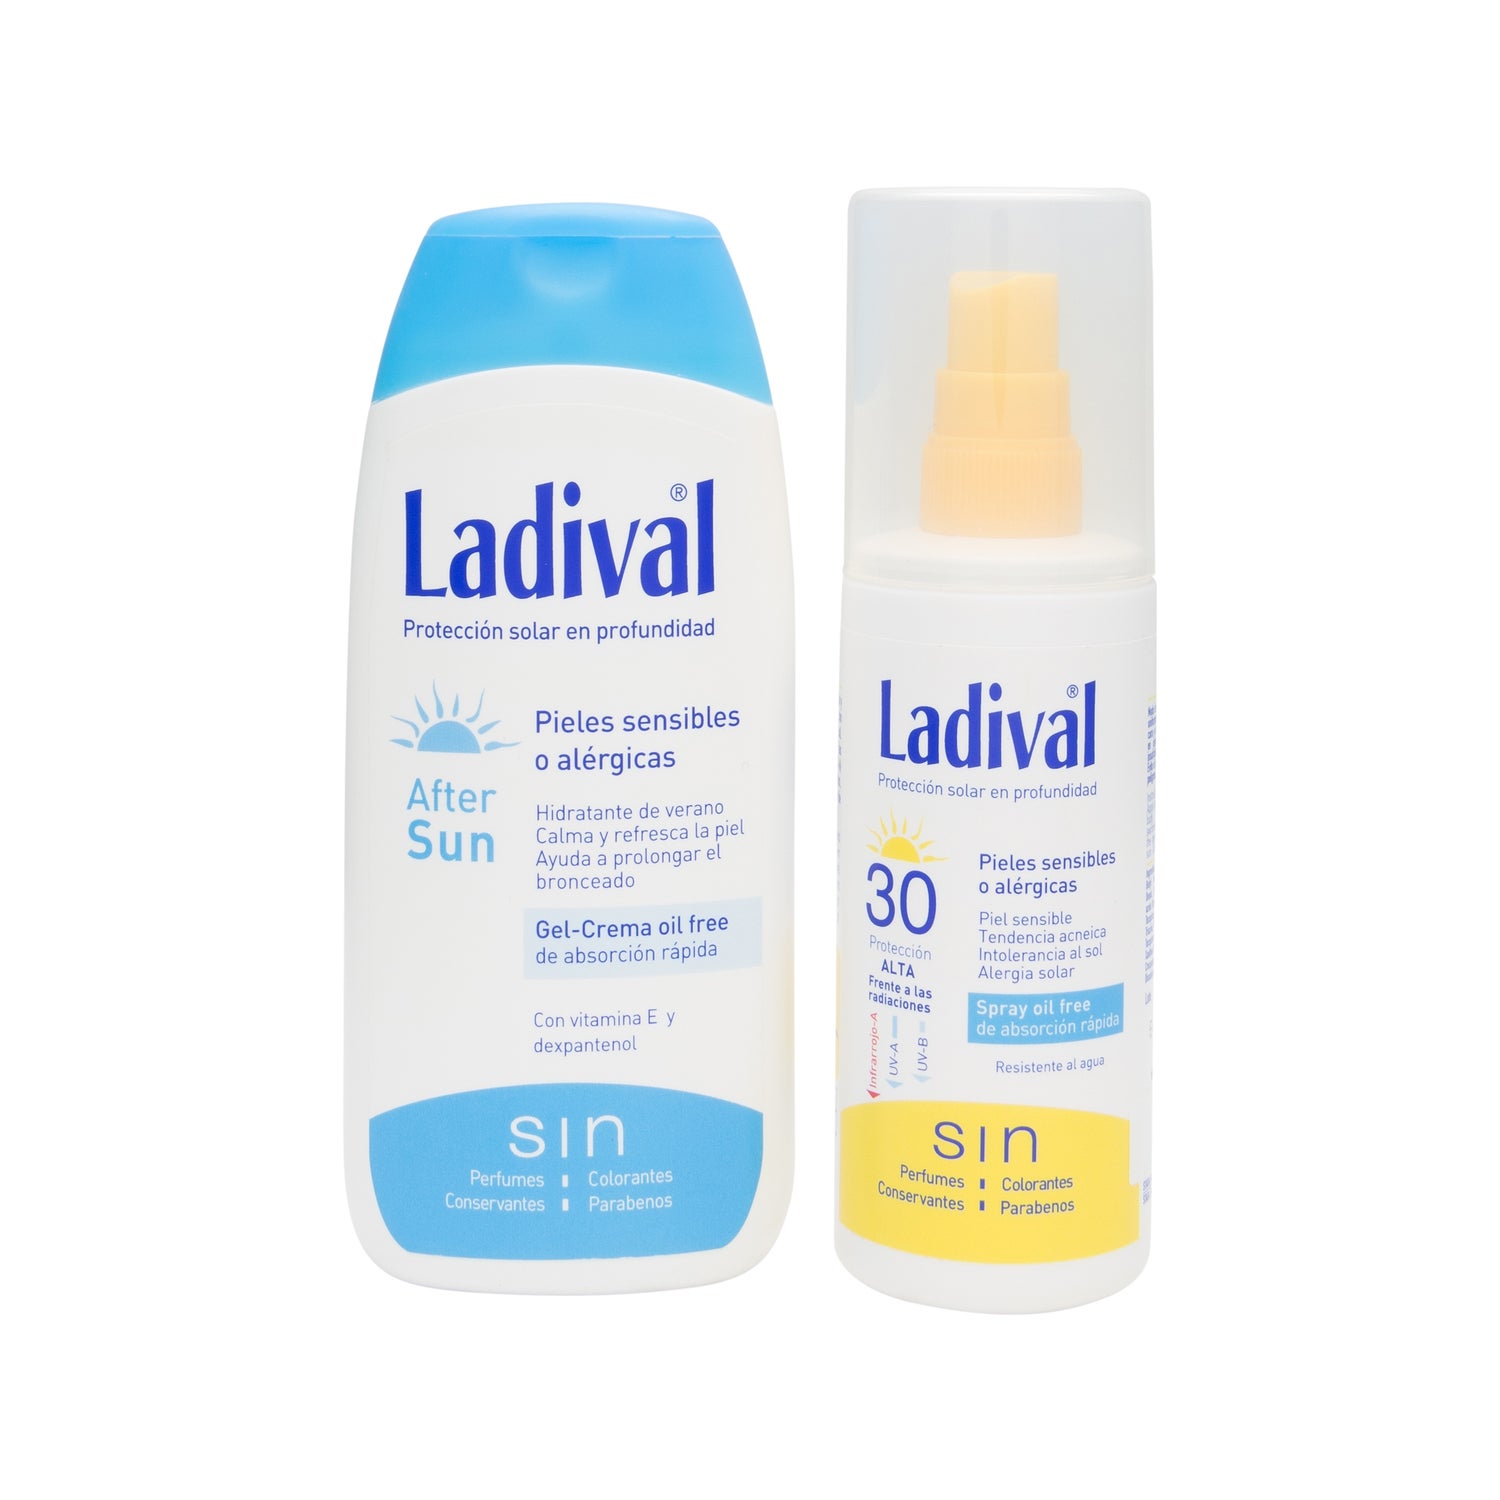 ladival pieles sensibles oil free spf30 spray 150ml aftersun 200ml